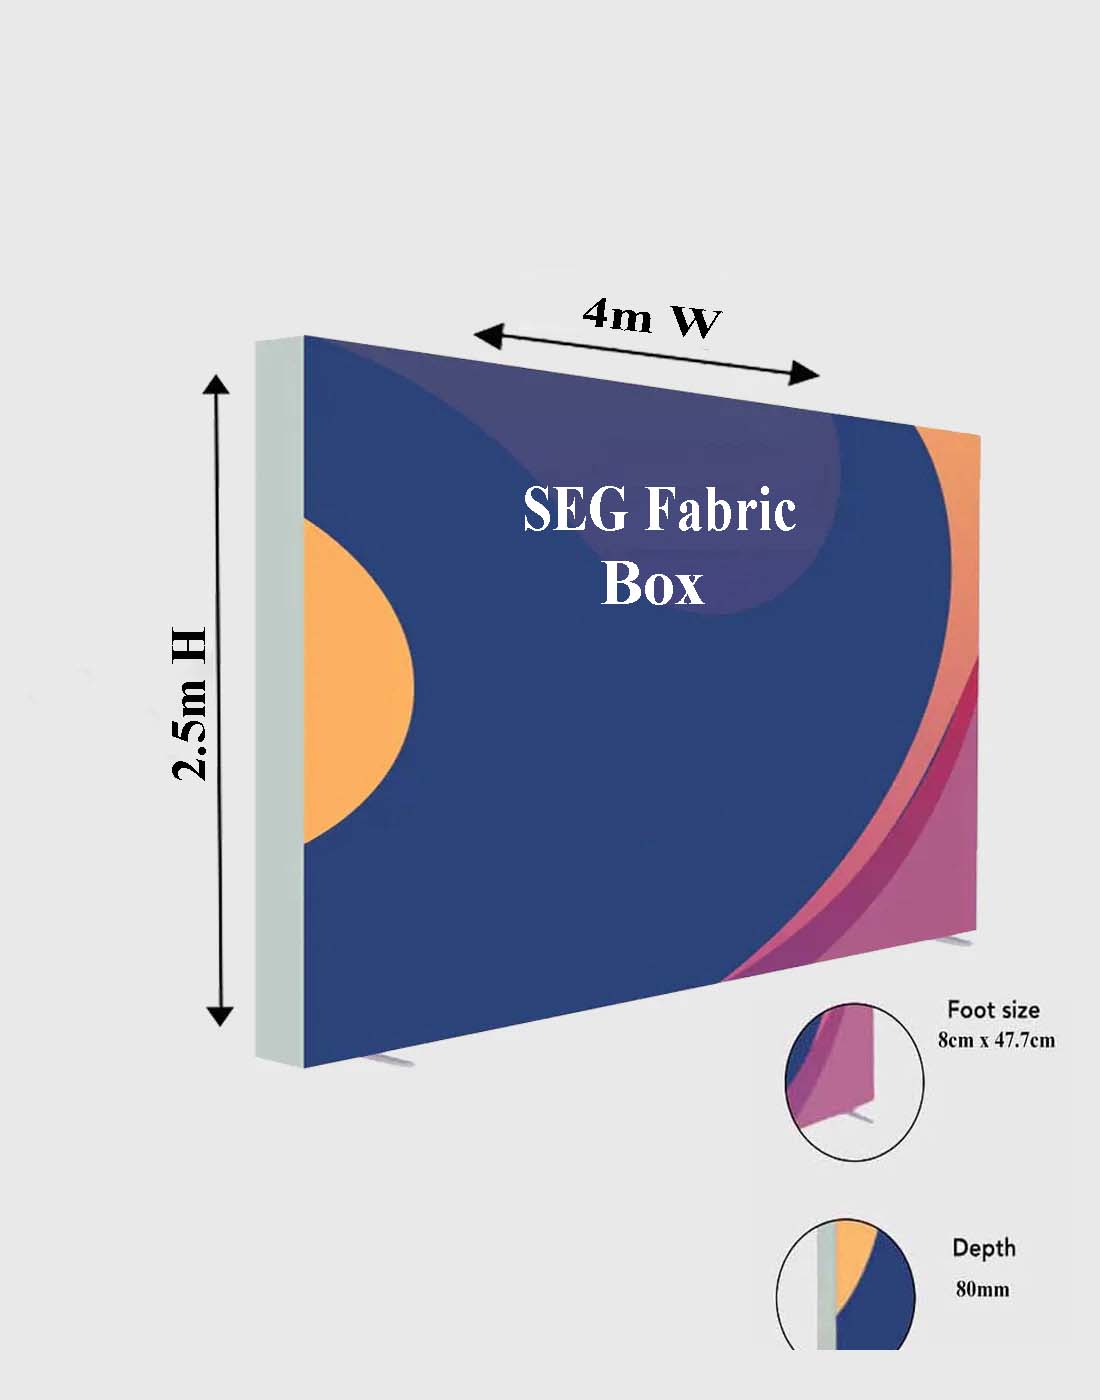 SEG Fabric Media Wall - 4m x 2.5m